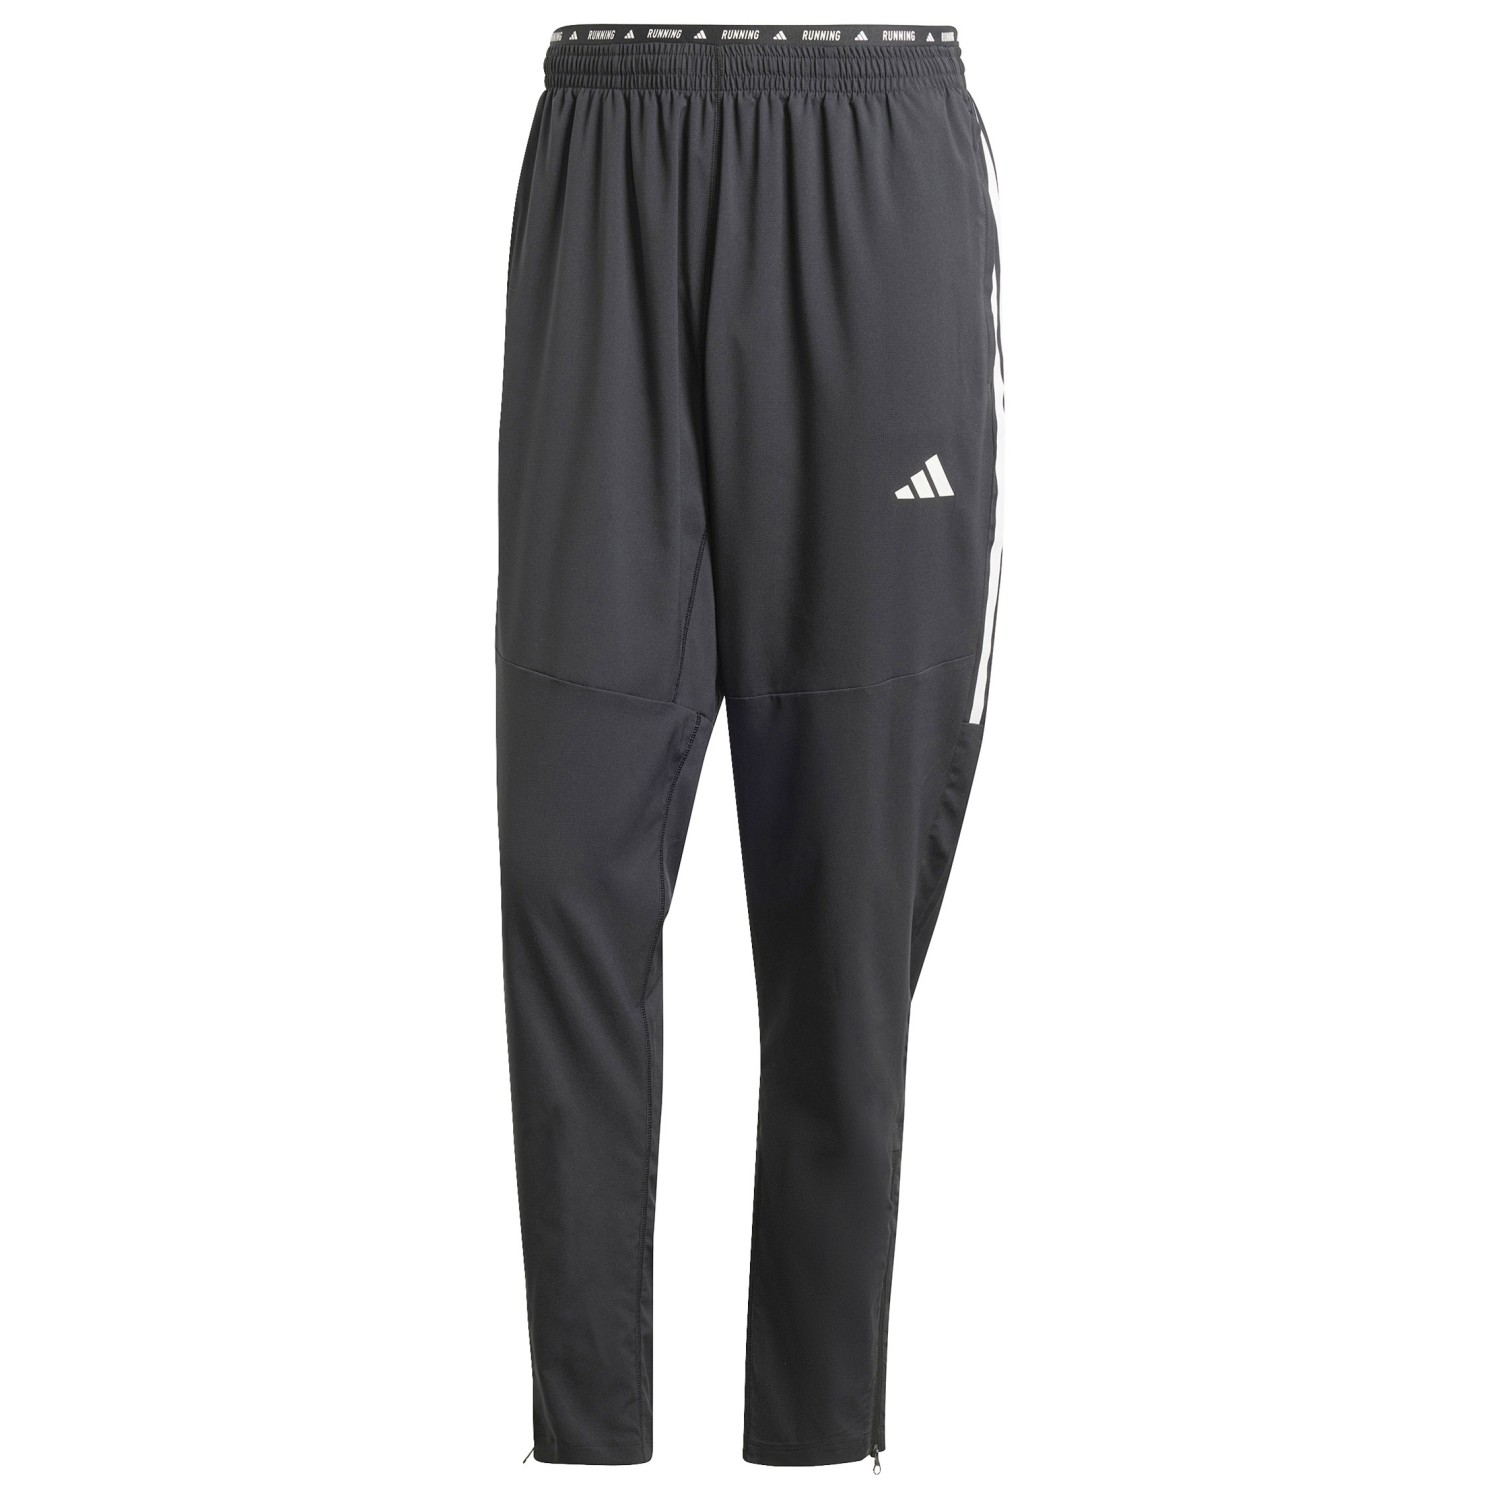 Брюки для бега Adidas Own The Run 3 Stripes Pant, черный